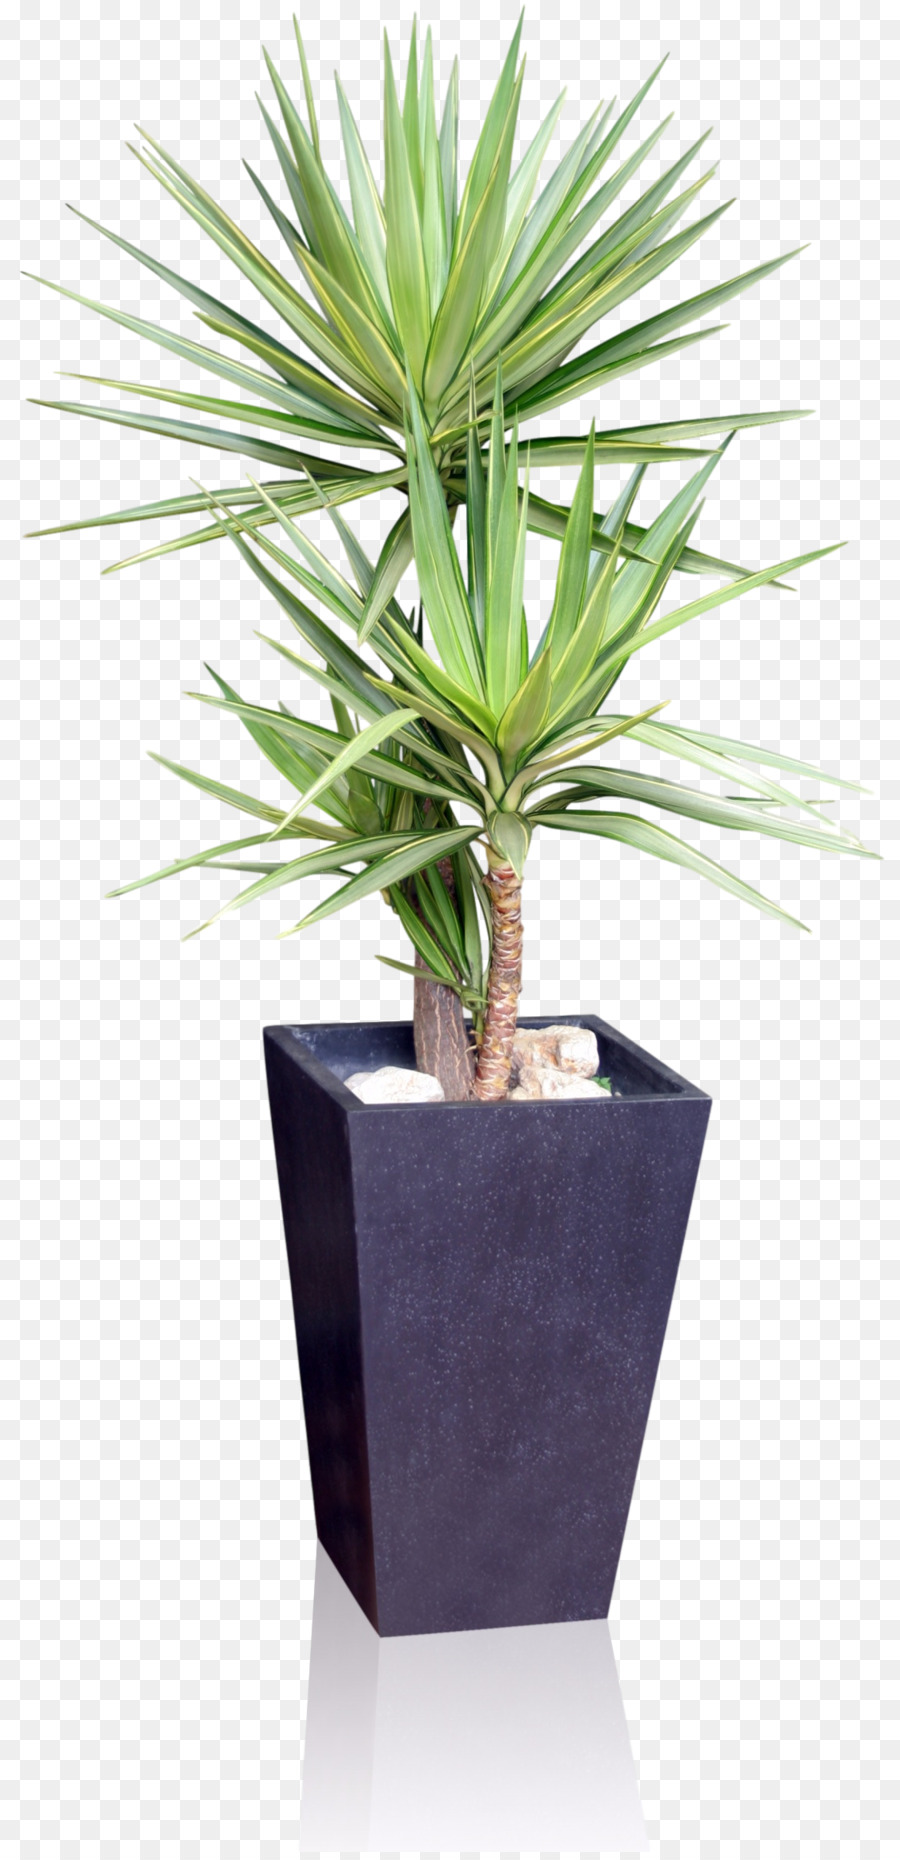 Palm Tree Background img